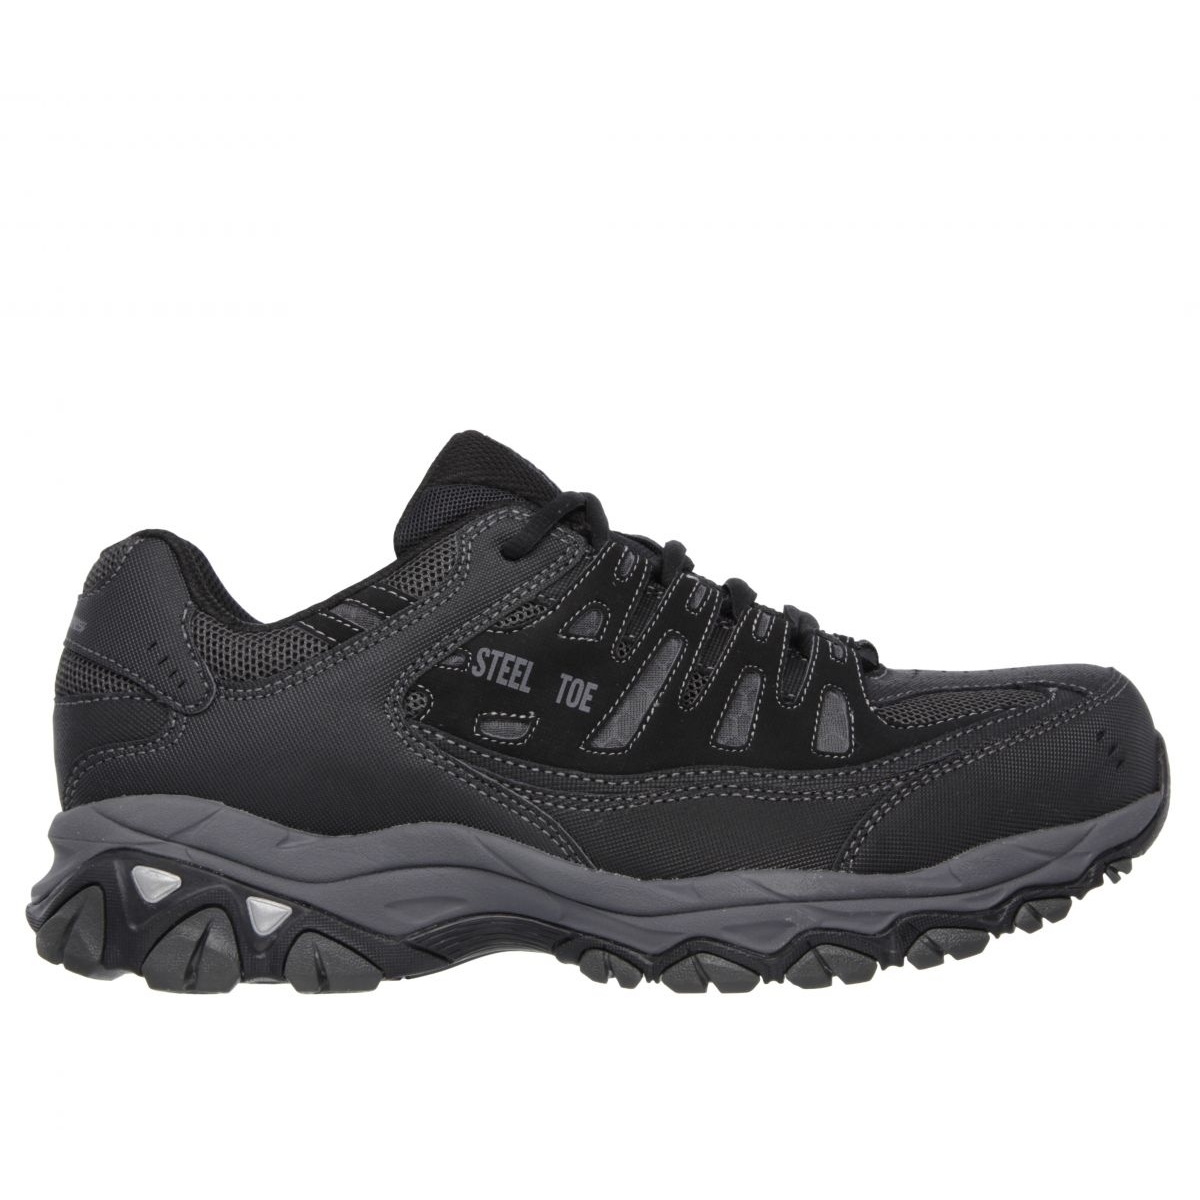 Skechers Men's Cankton-U Industrial Shoe 7 BLACK/CHARCOAL - BLACK/CHARCOAL, 10.5 Wide